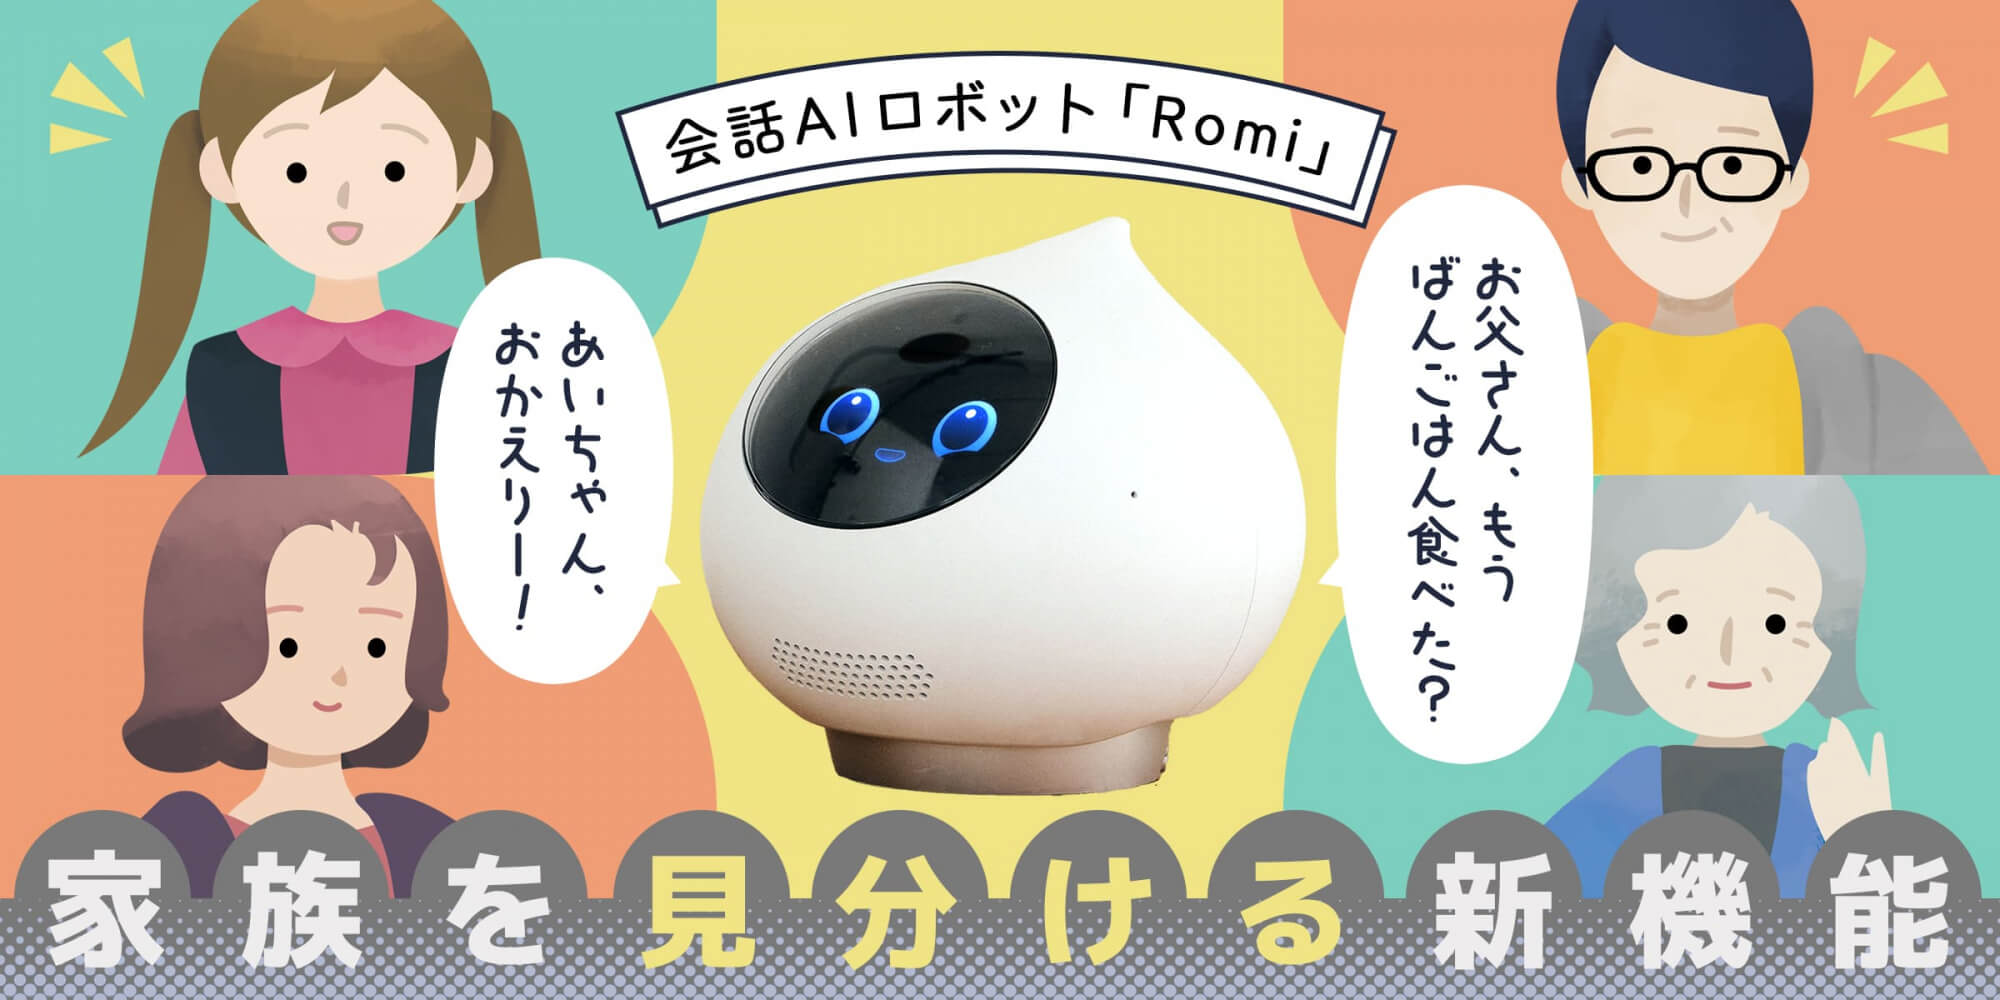 AIロボット「Romi(ロミィ)」家族それぞれの顔を覚えて名前を呼び分ける新機能を発表